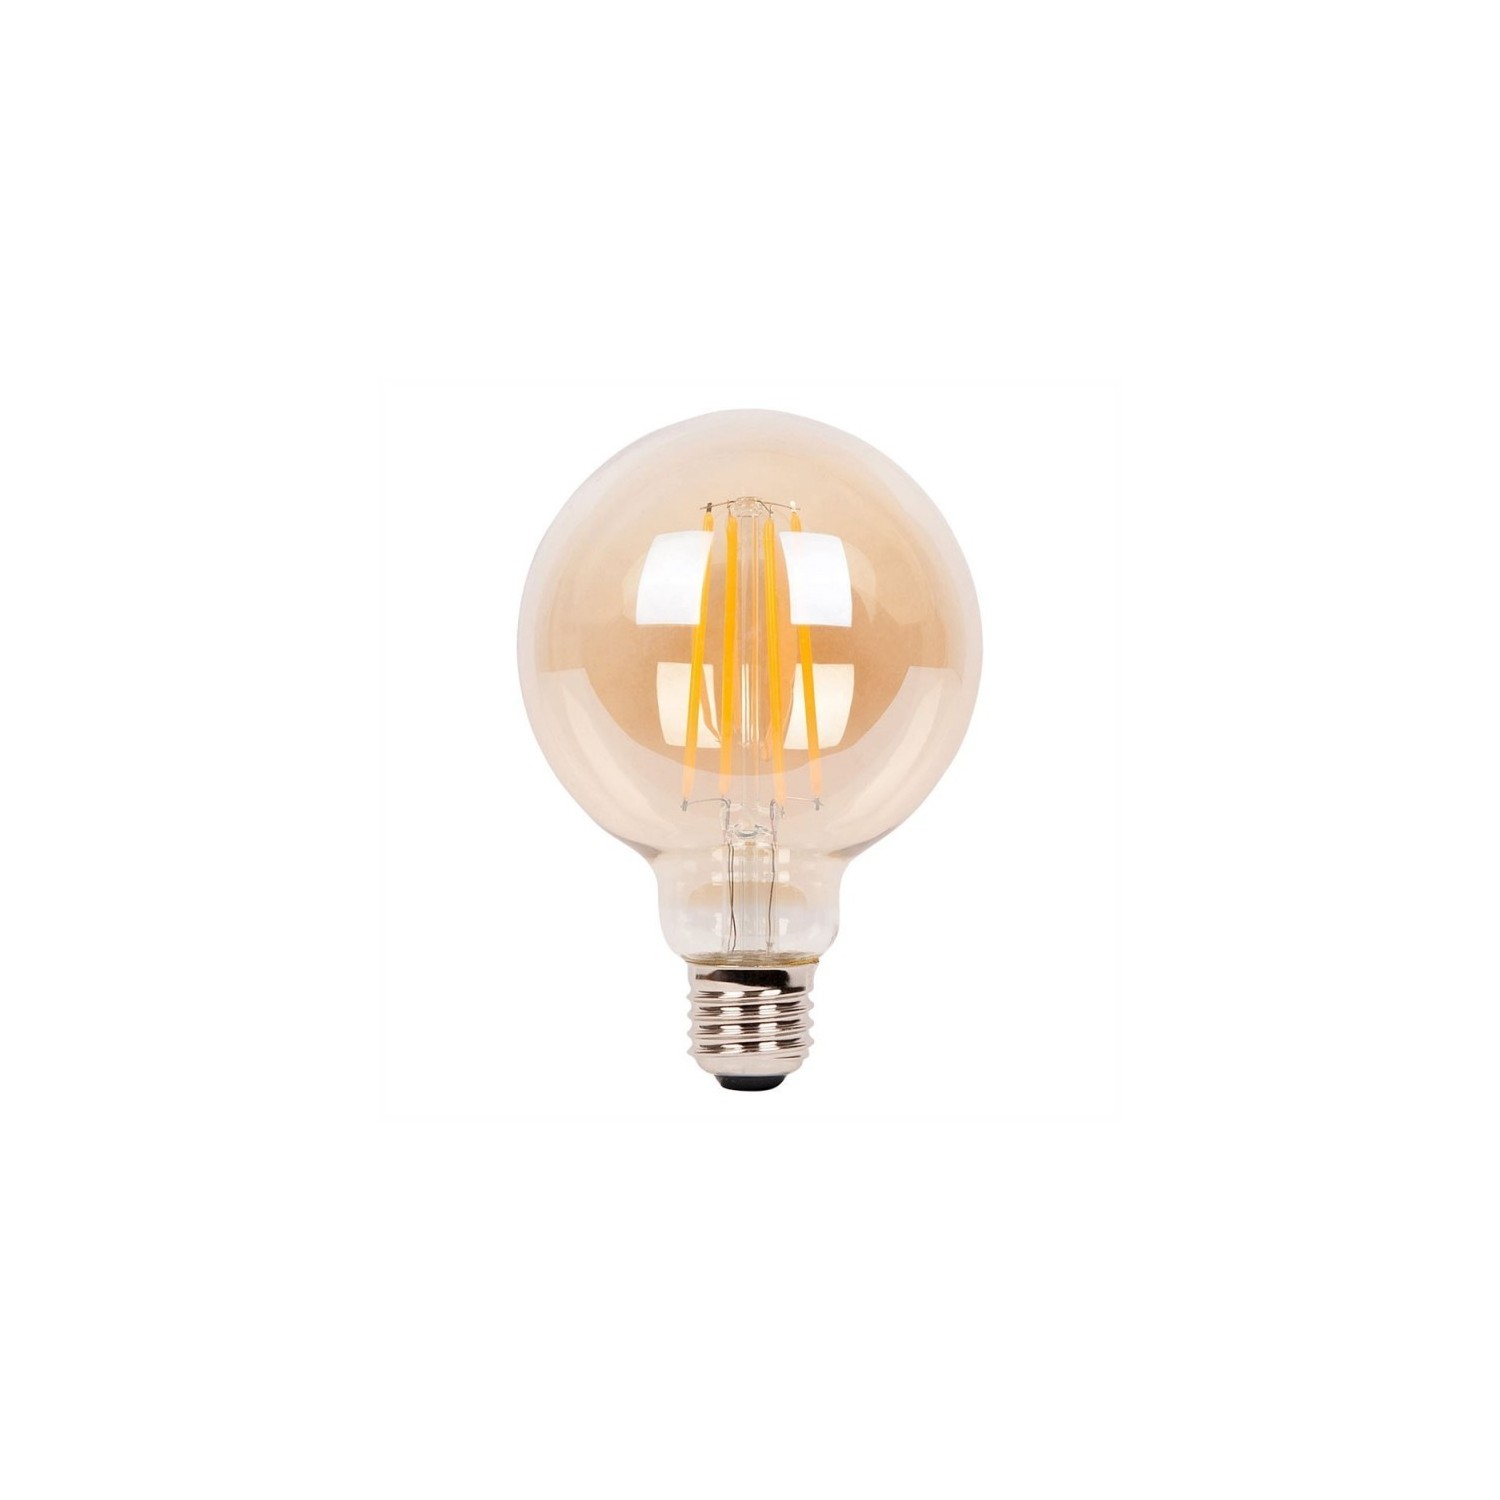 Bombilla dorada LED Globo Pequeño G80 de 4W decorativa vintage 2700ºK Dimerizable - LCO068